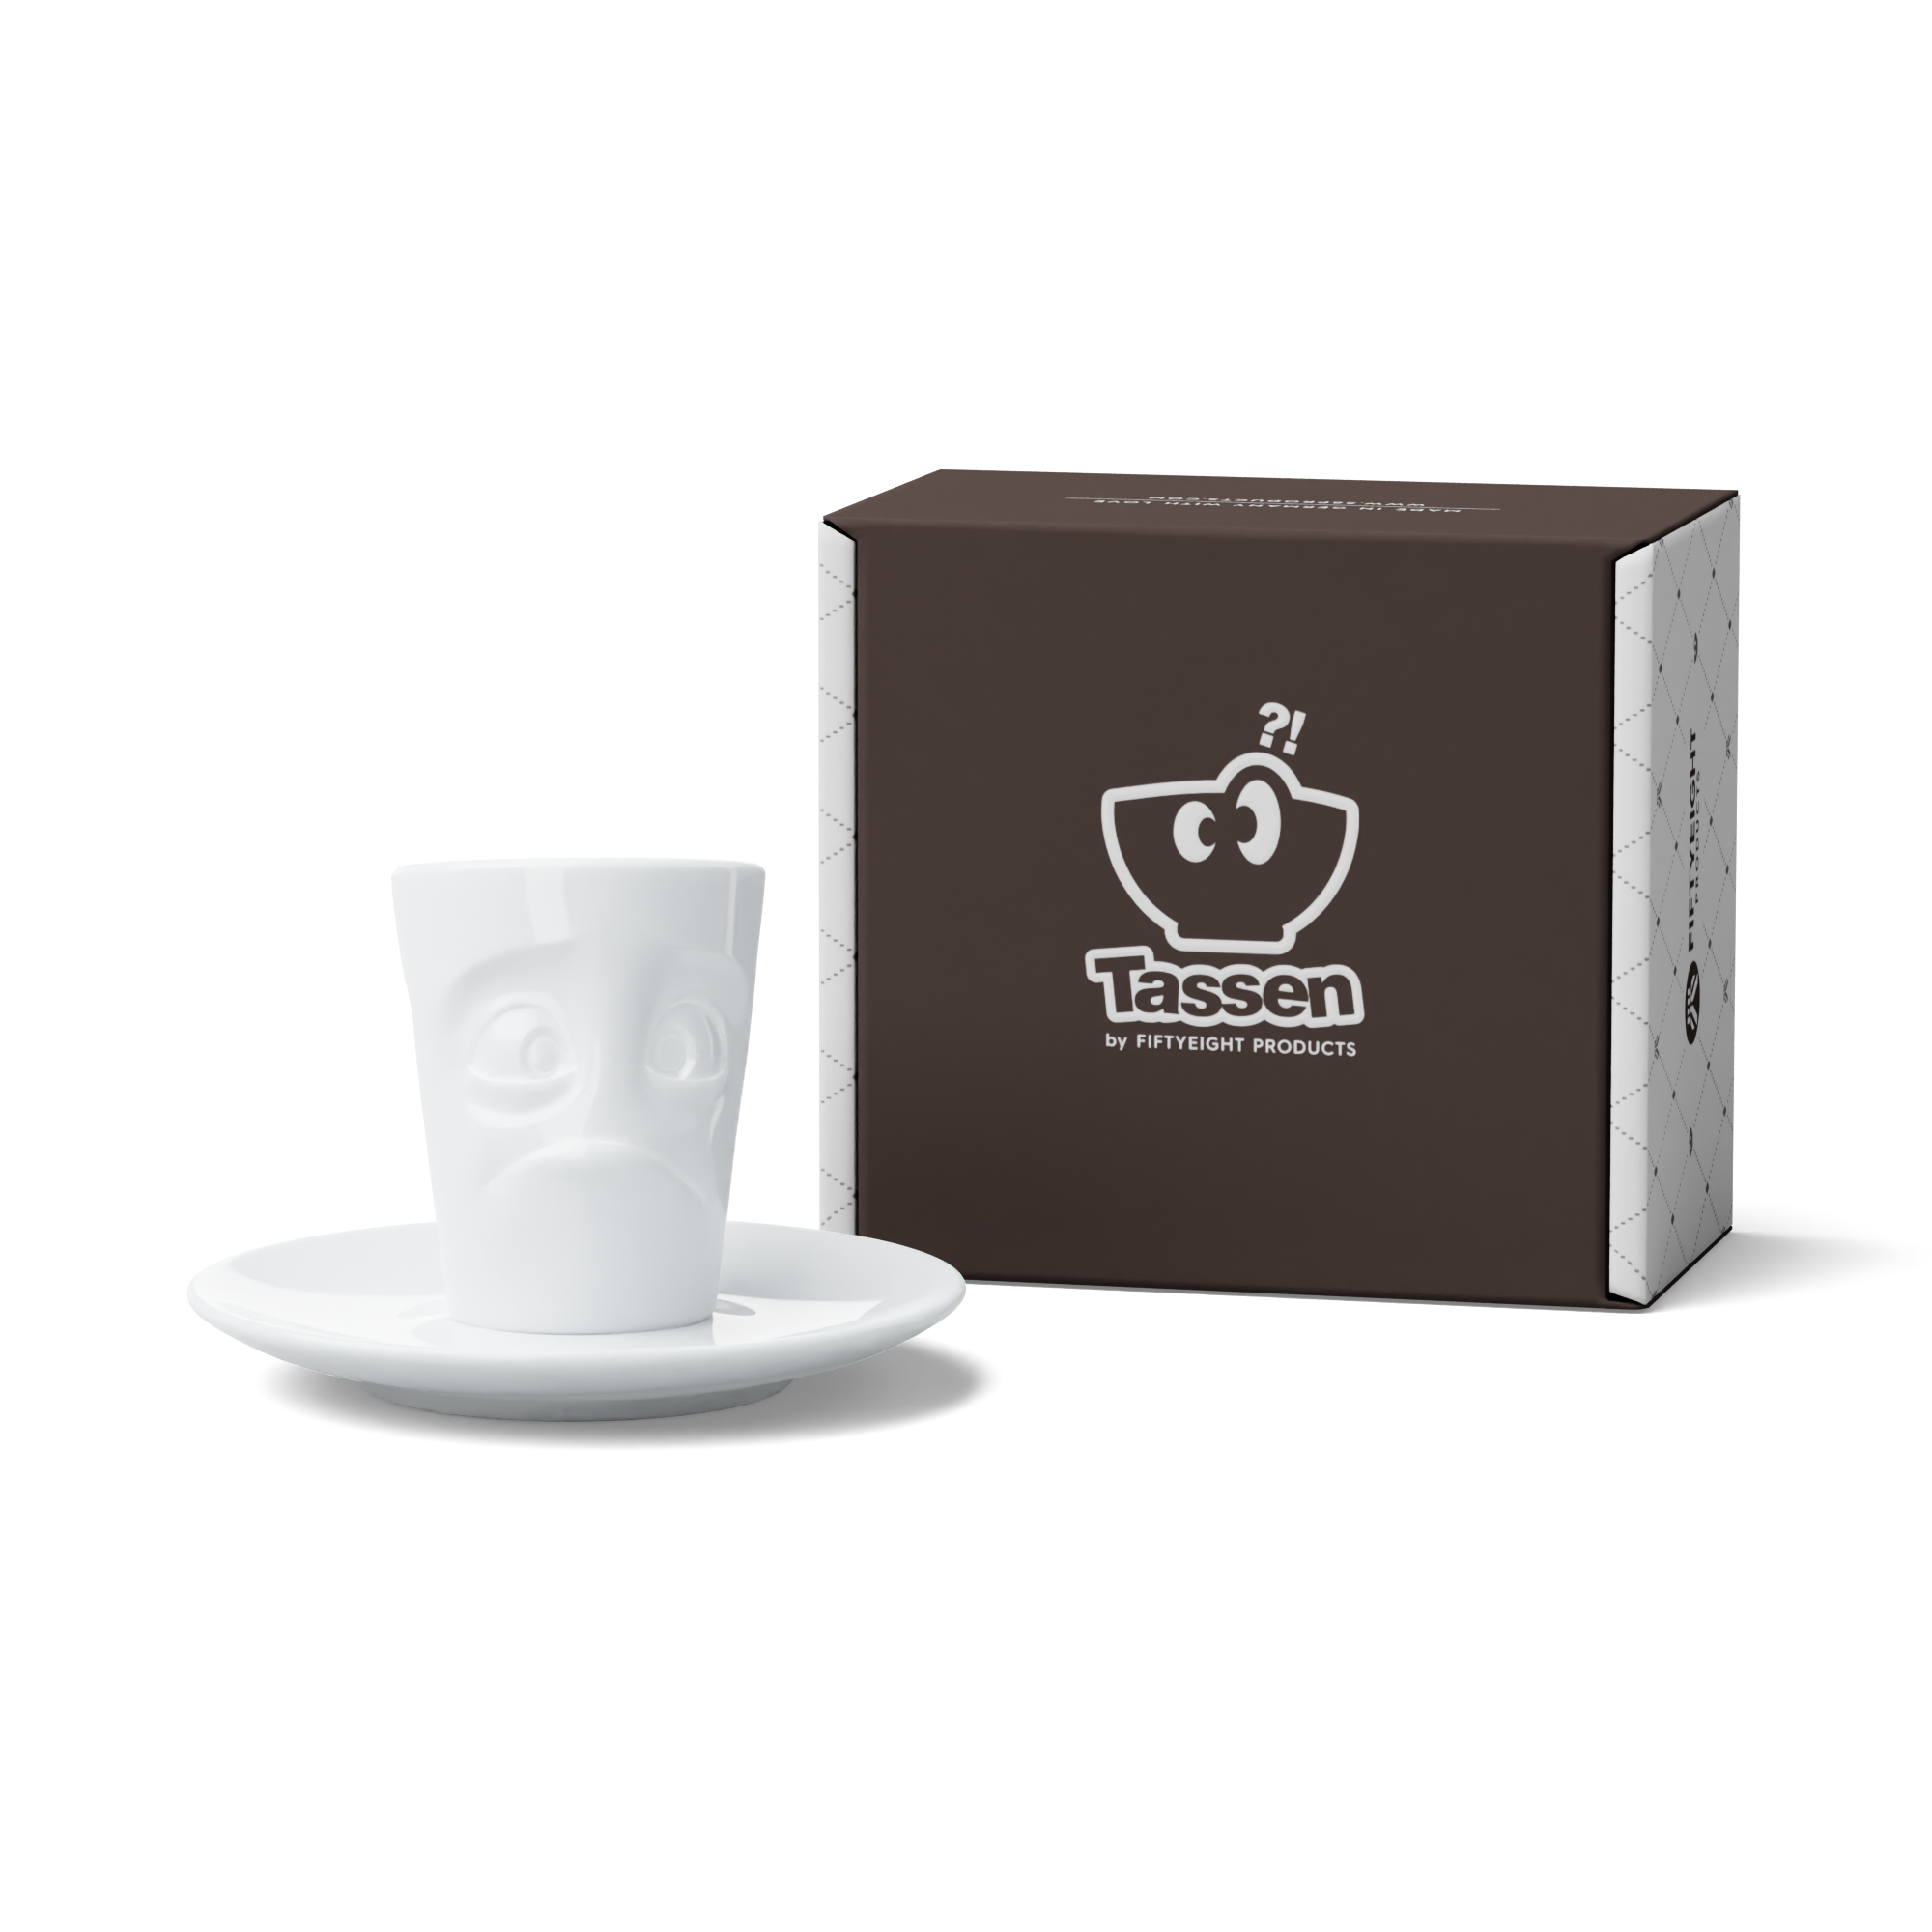 5 Oz. Mini Espresso Mugs w/ Handle - 8 Ct.